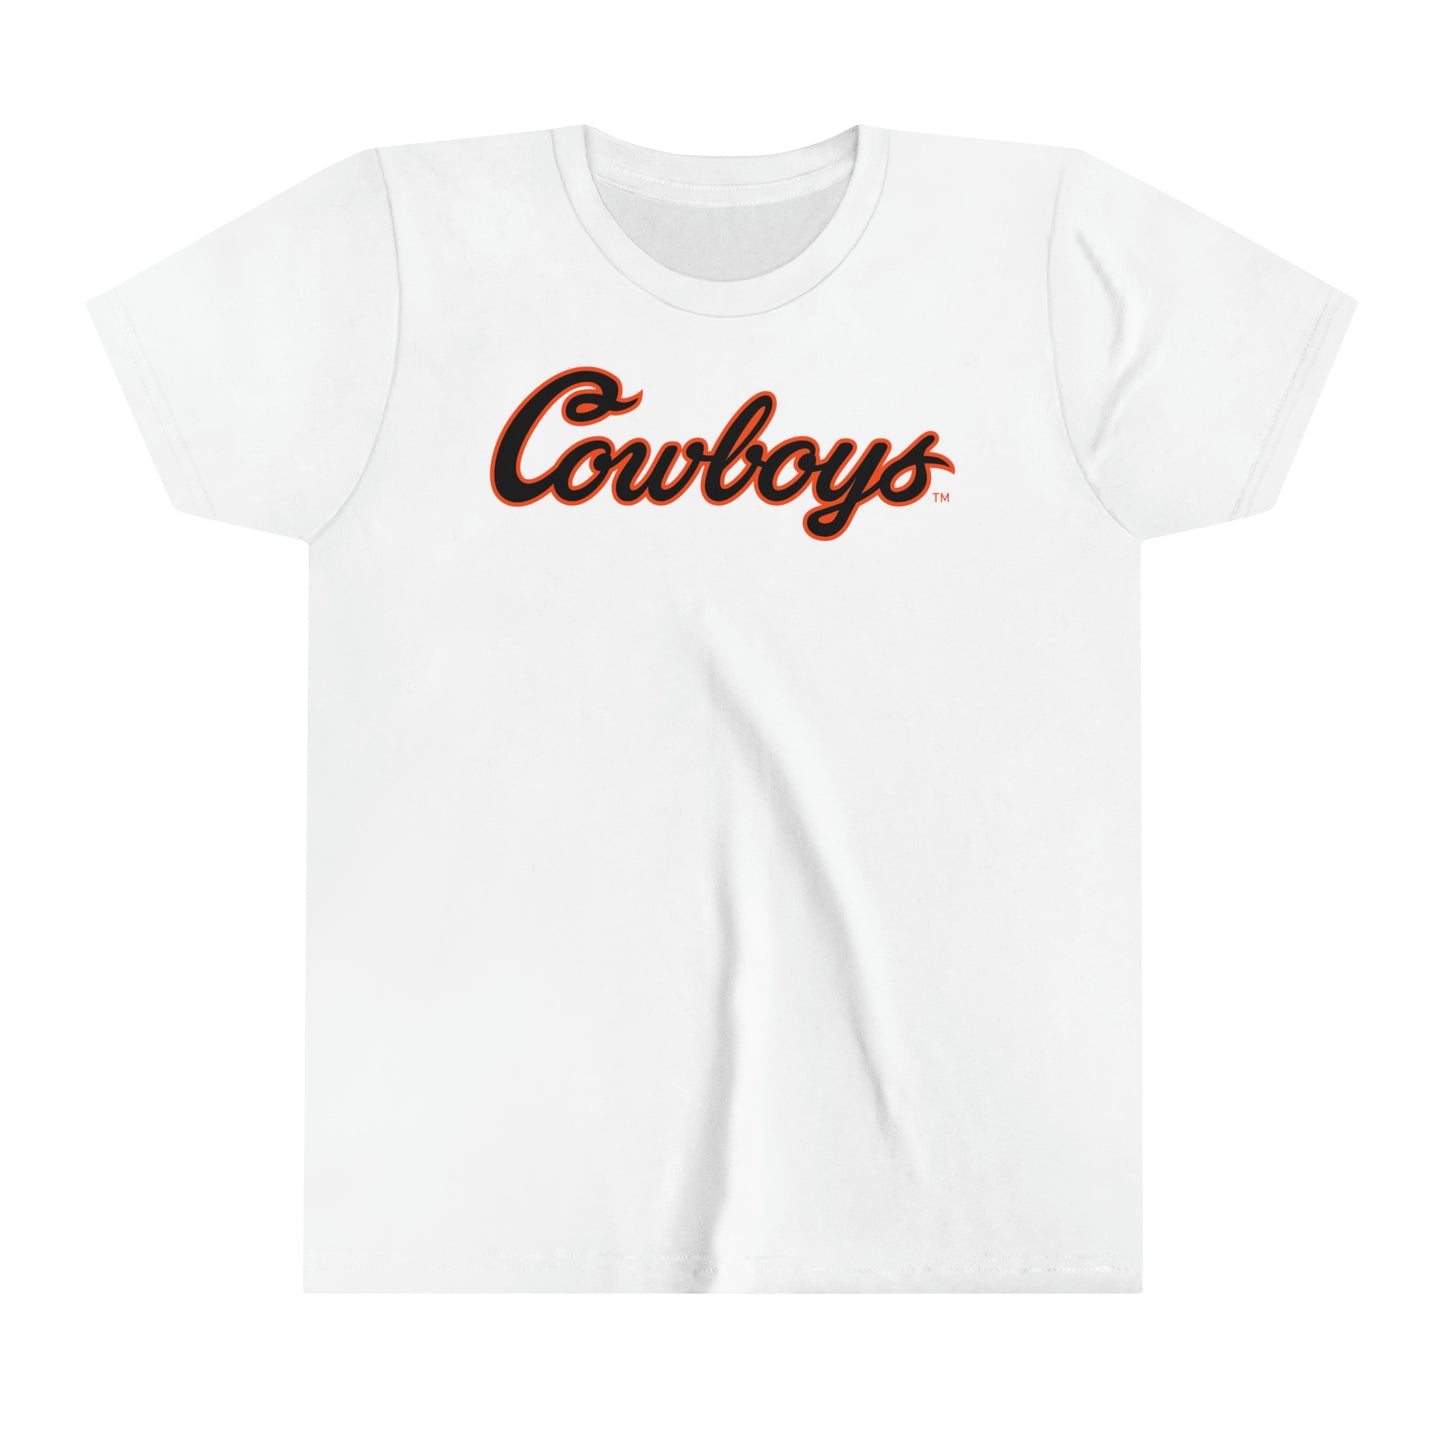 Ollie Gordon II #0 Cursive Cowboys Youth T-Shirt